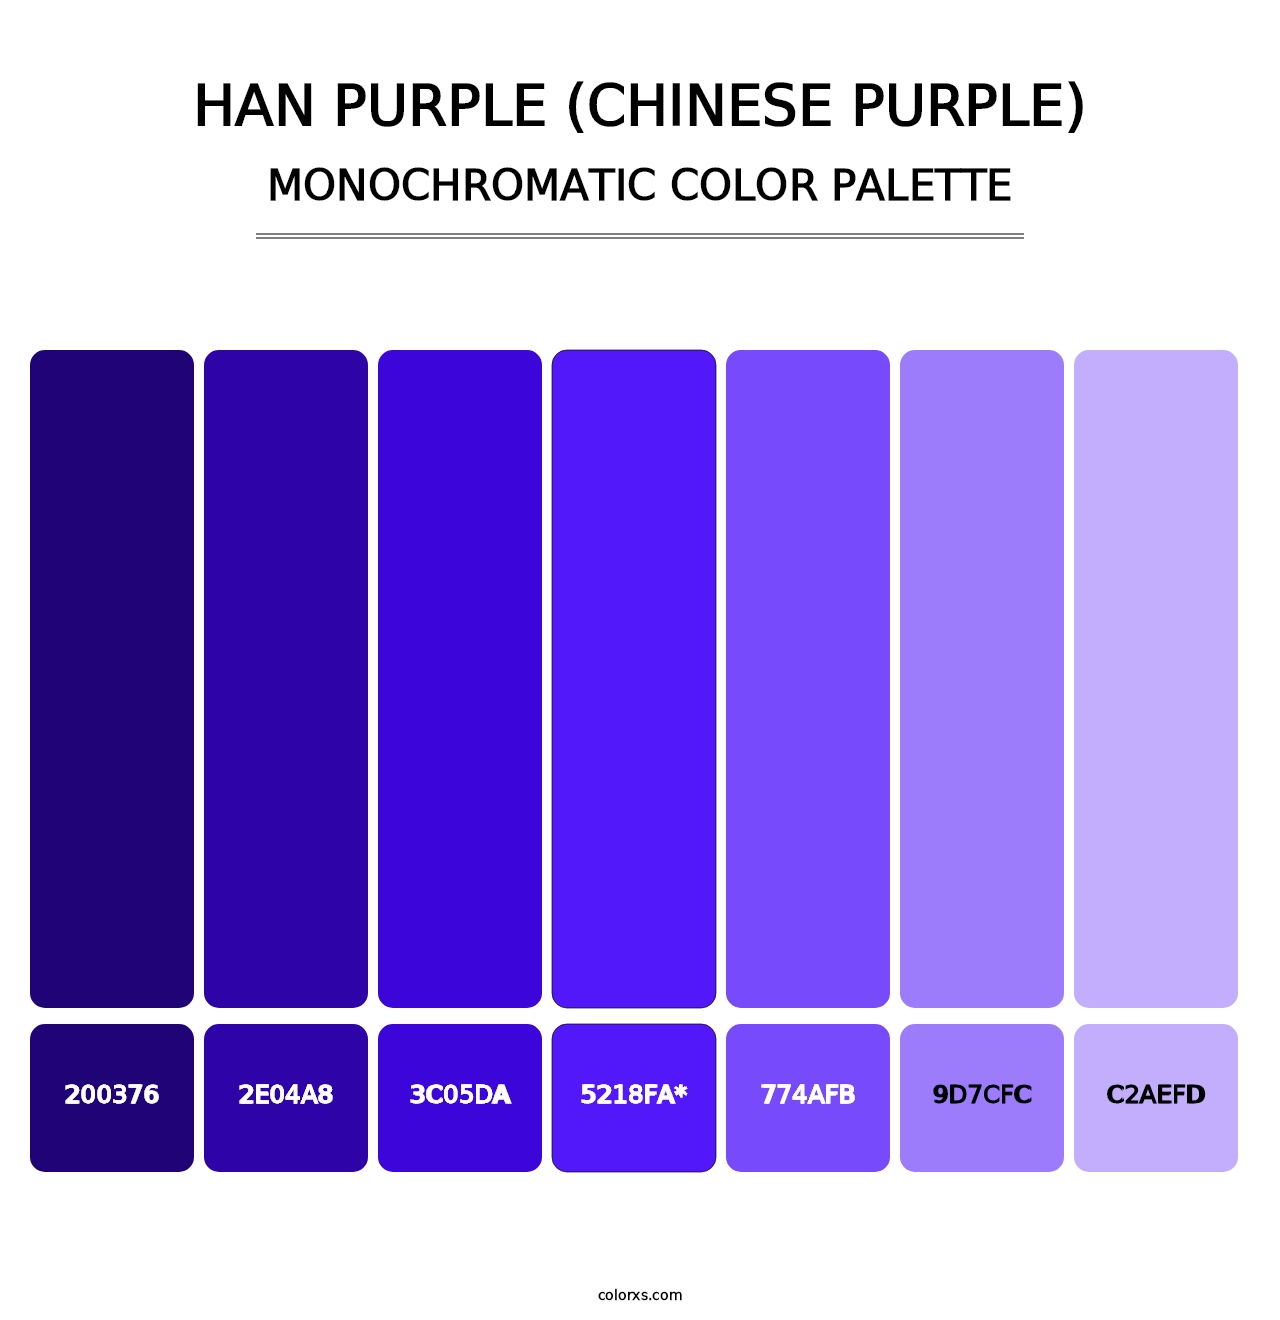 Han Purple (Chinese Purple) - Monochromatic Color Palette